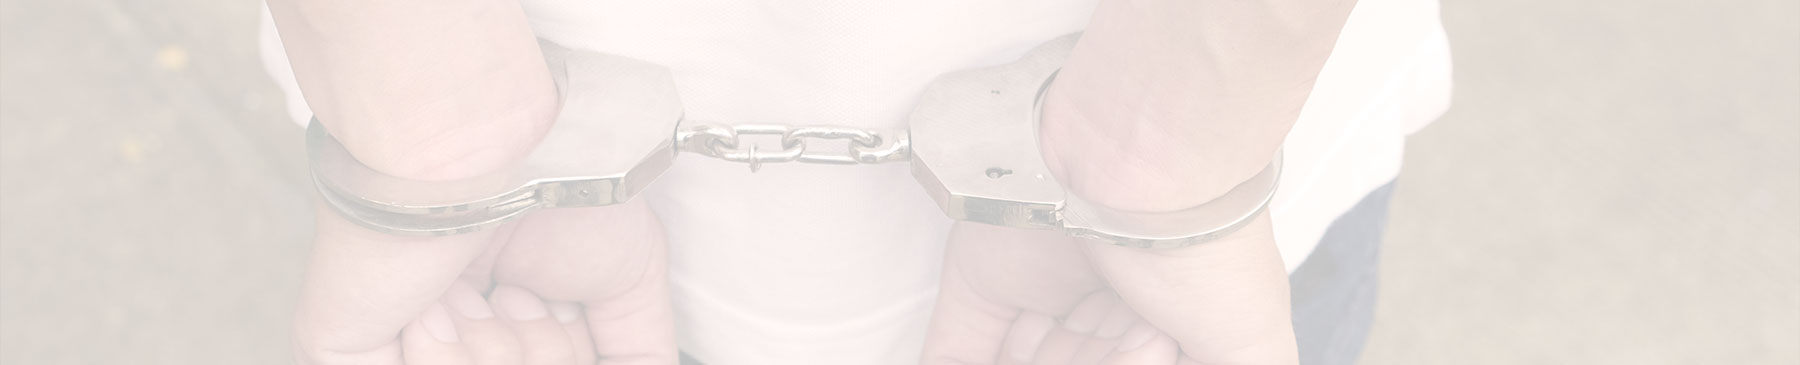 handcuffed youth